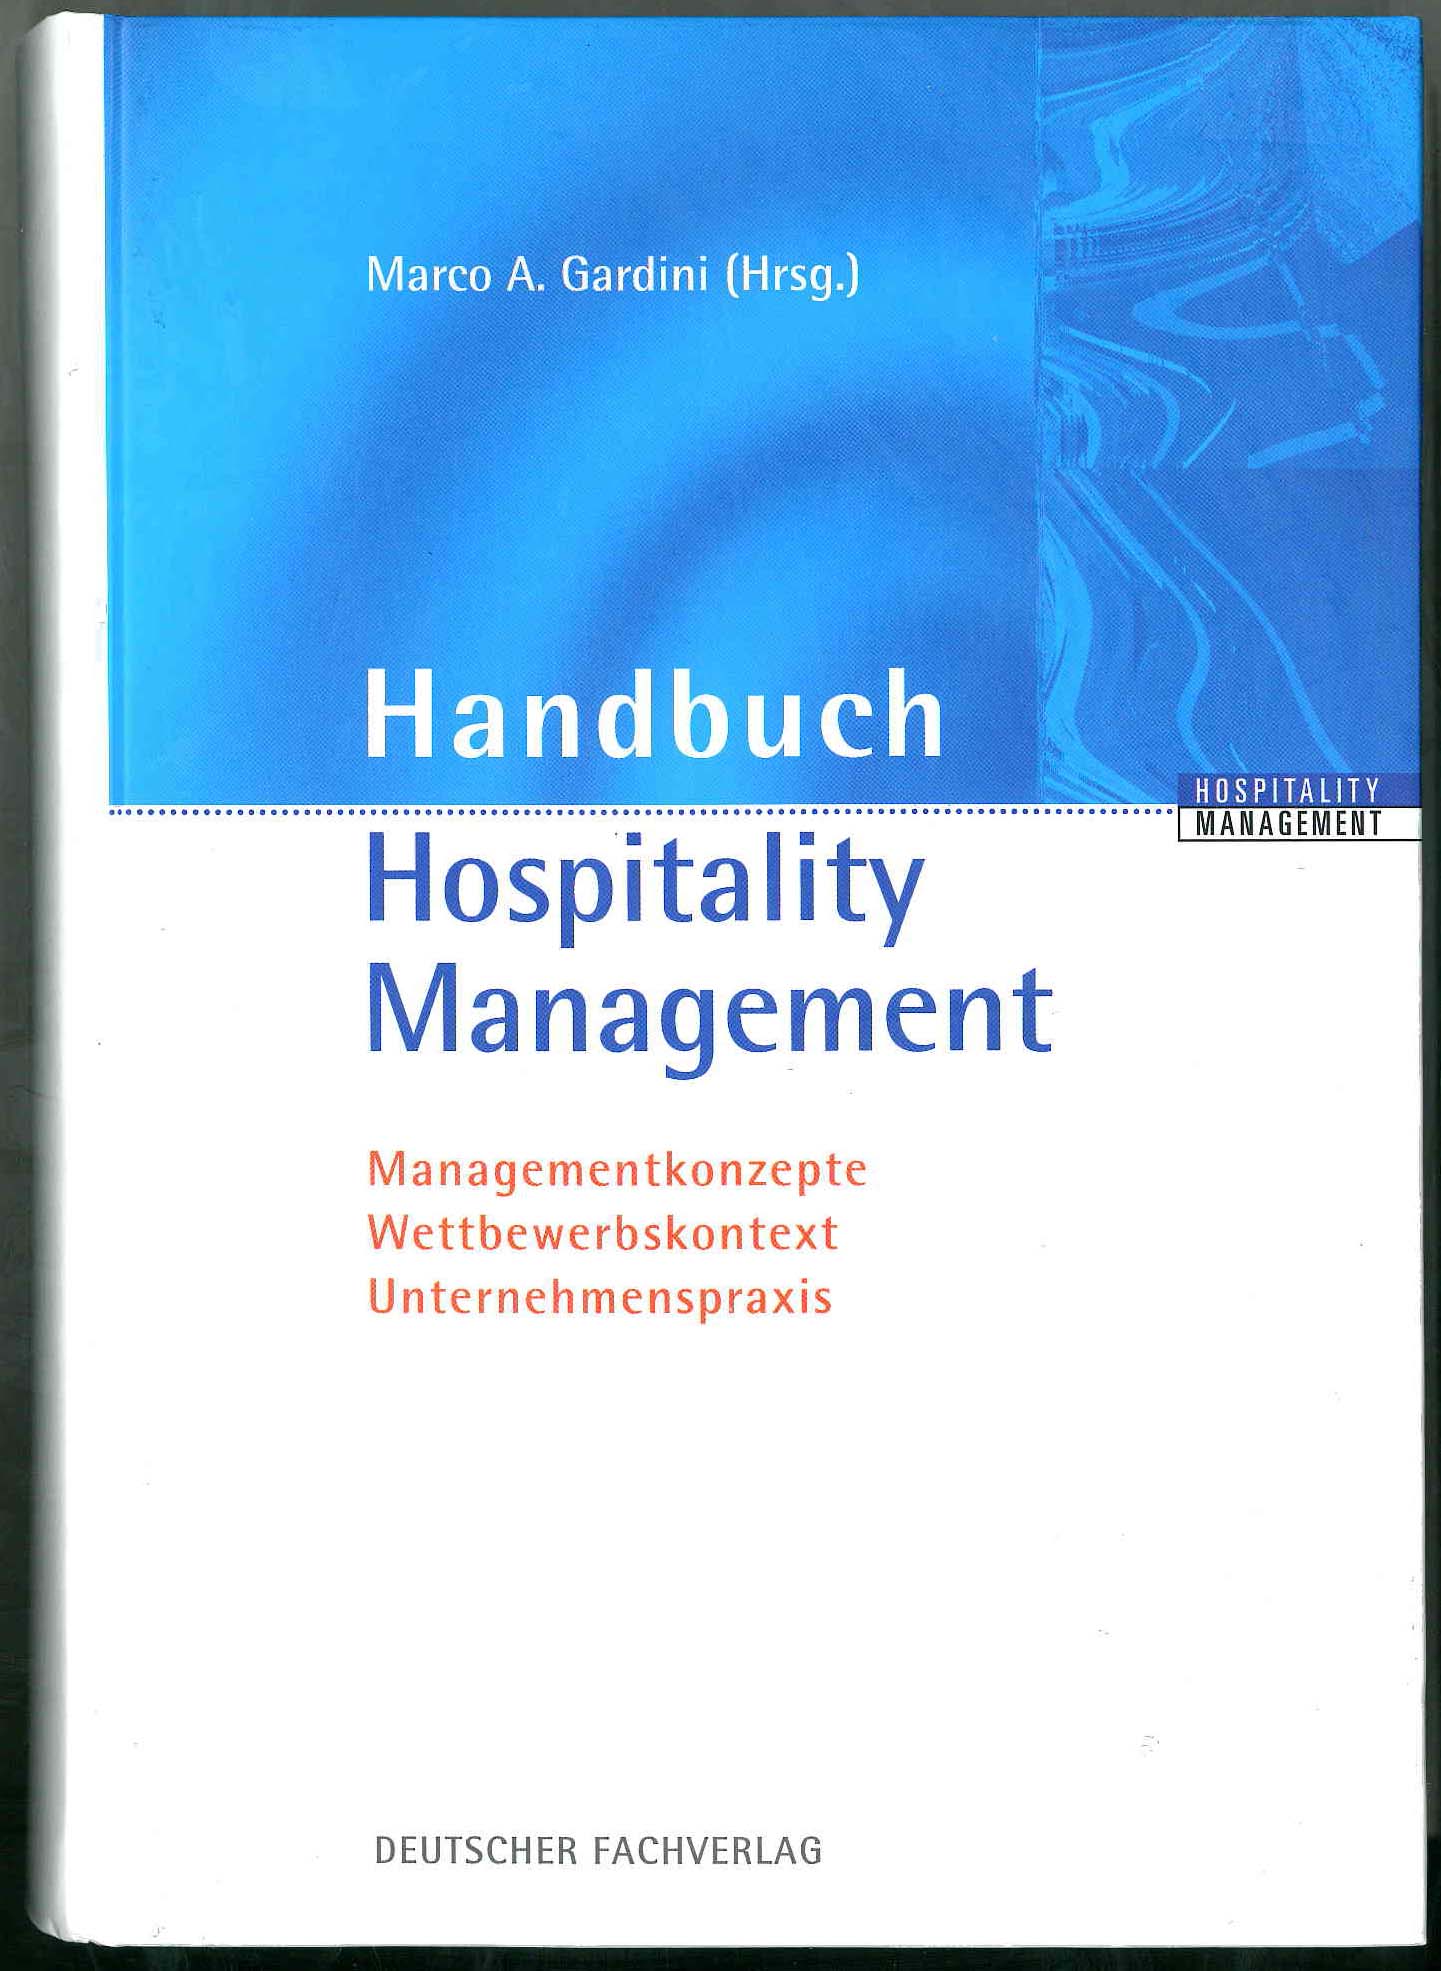 Handbuch "Hospitality Management" (2008, DFV, Herausgeber Prof. Marco A. Gardini)